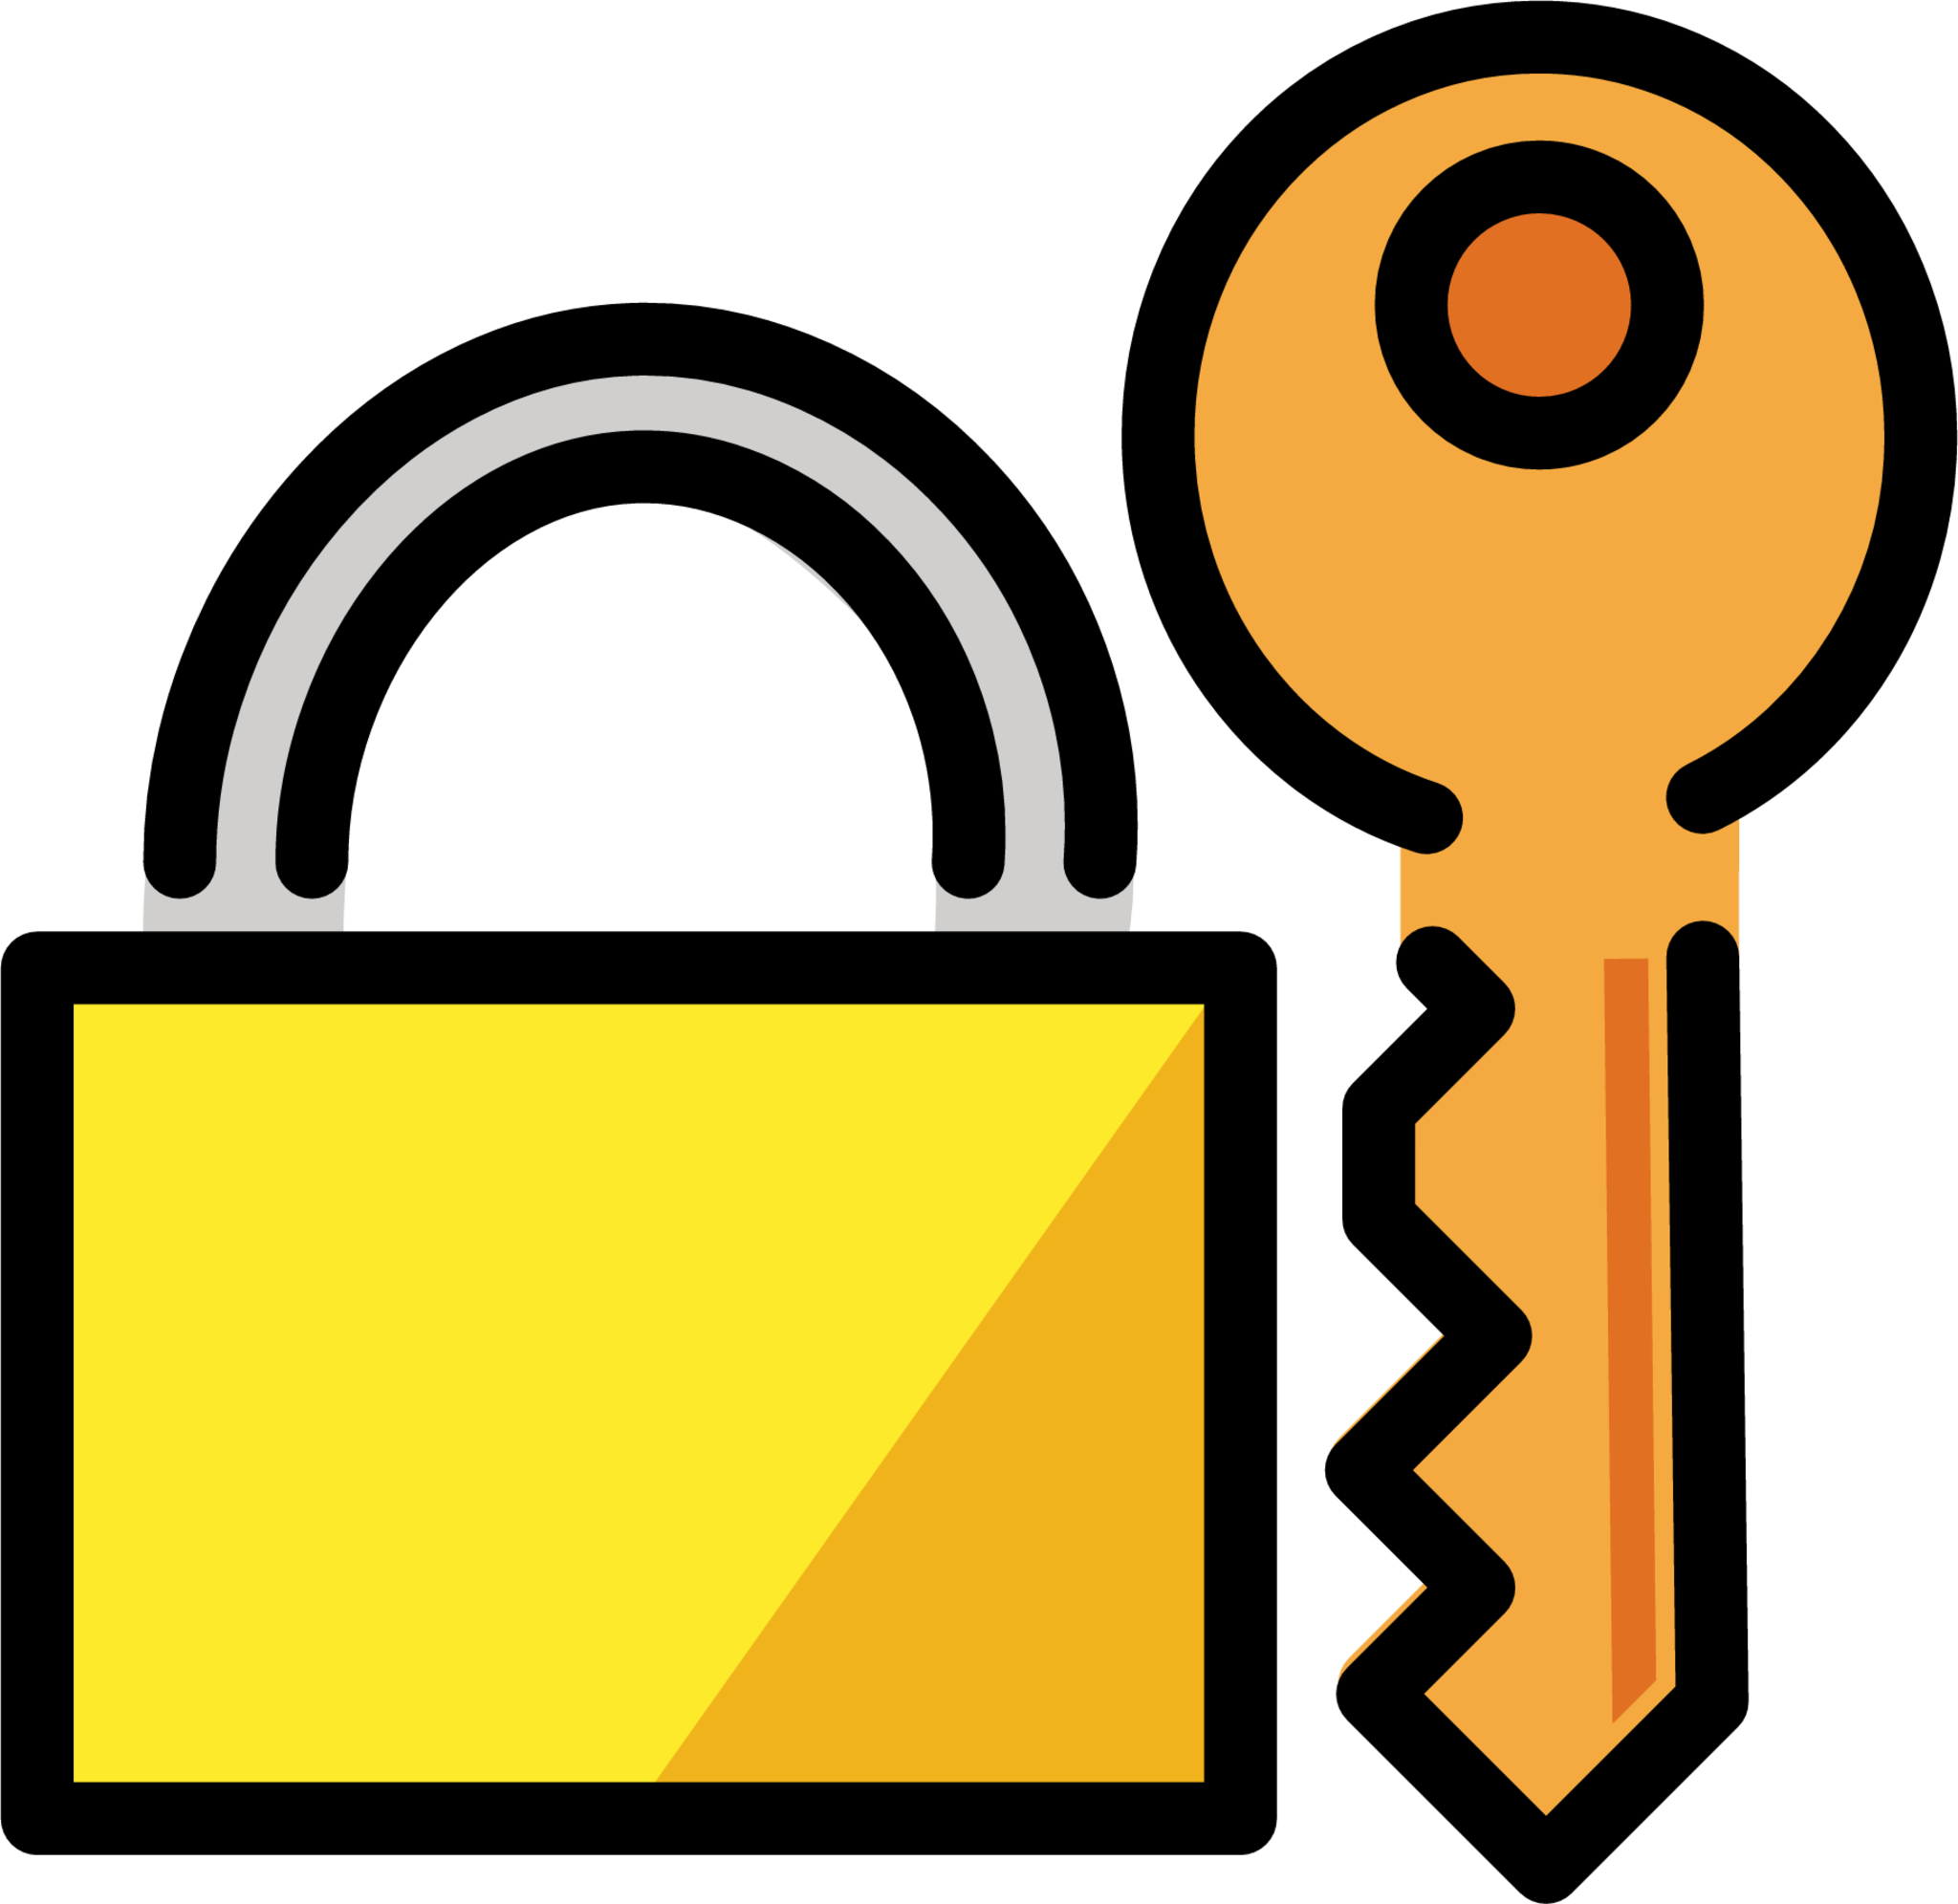 lock key icon png